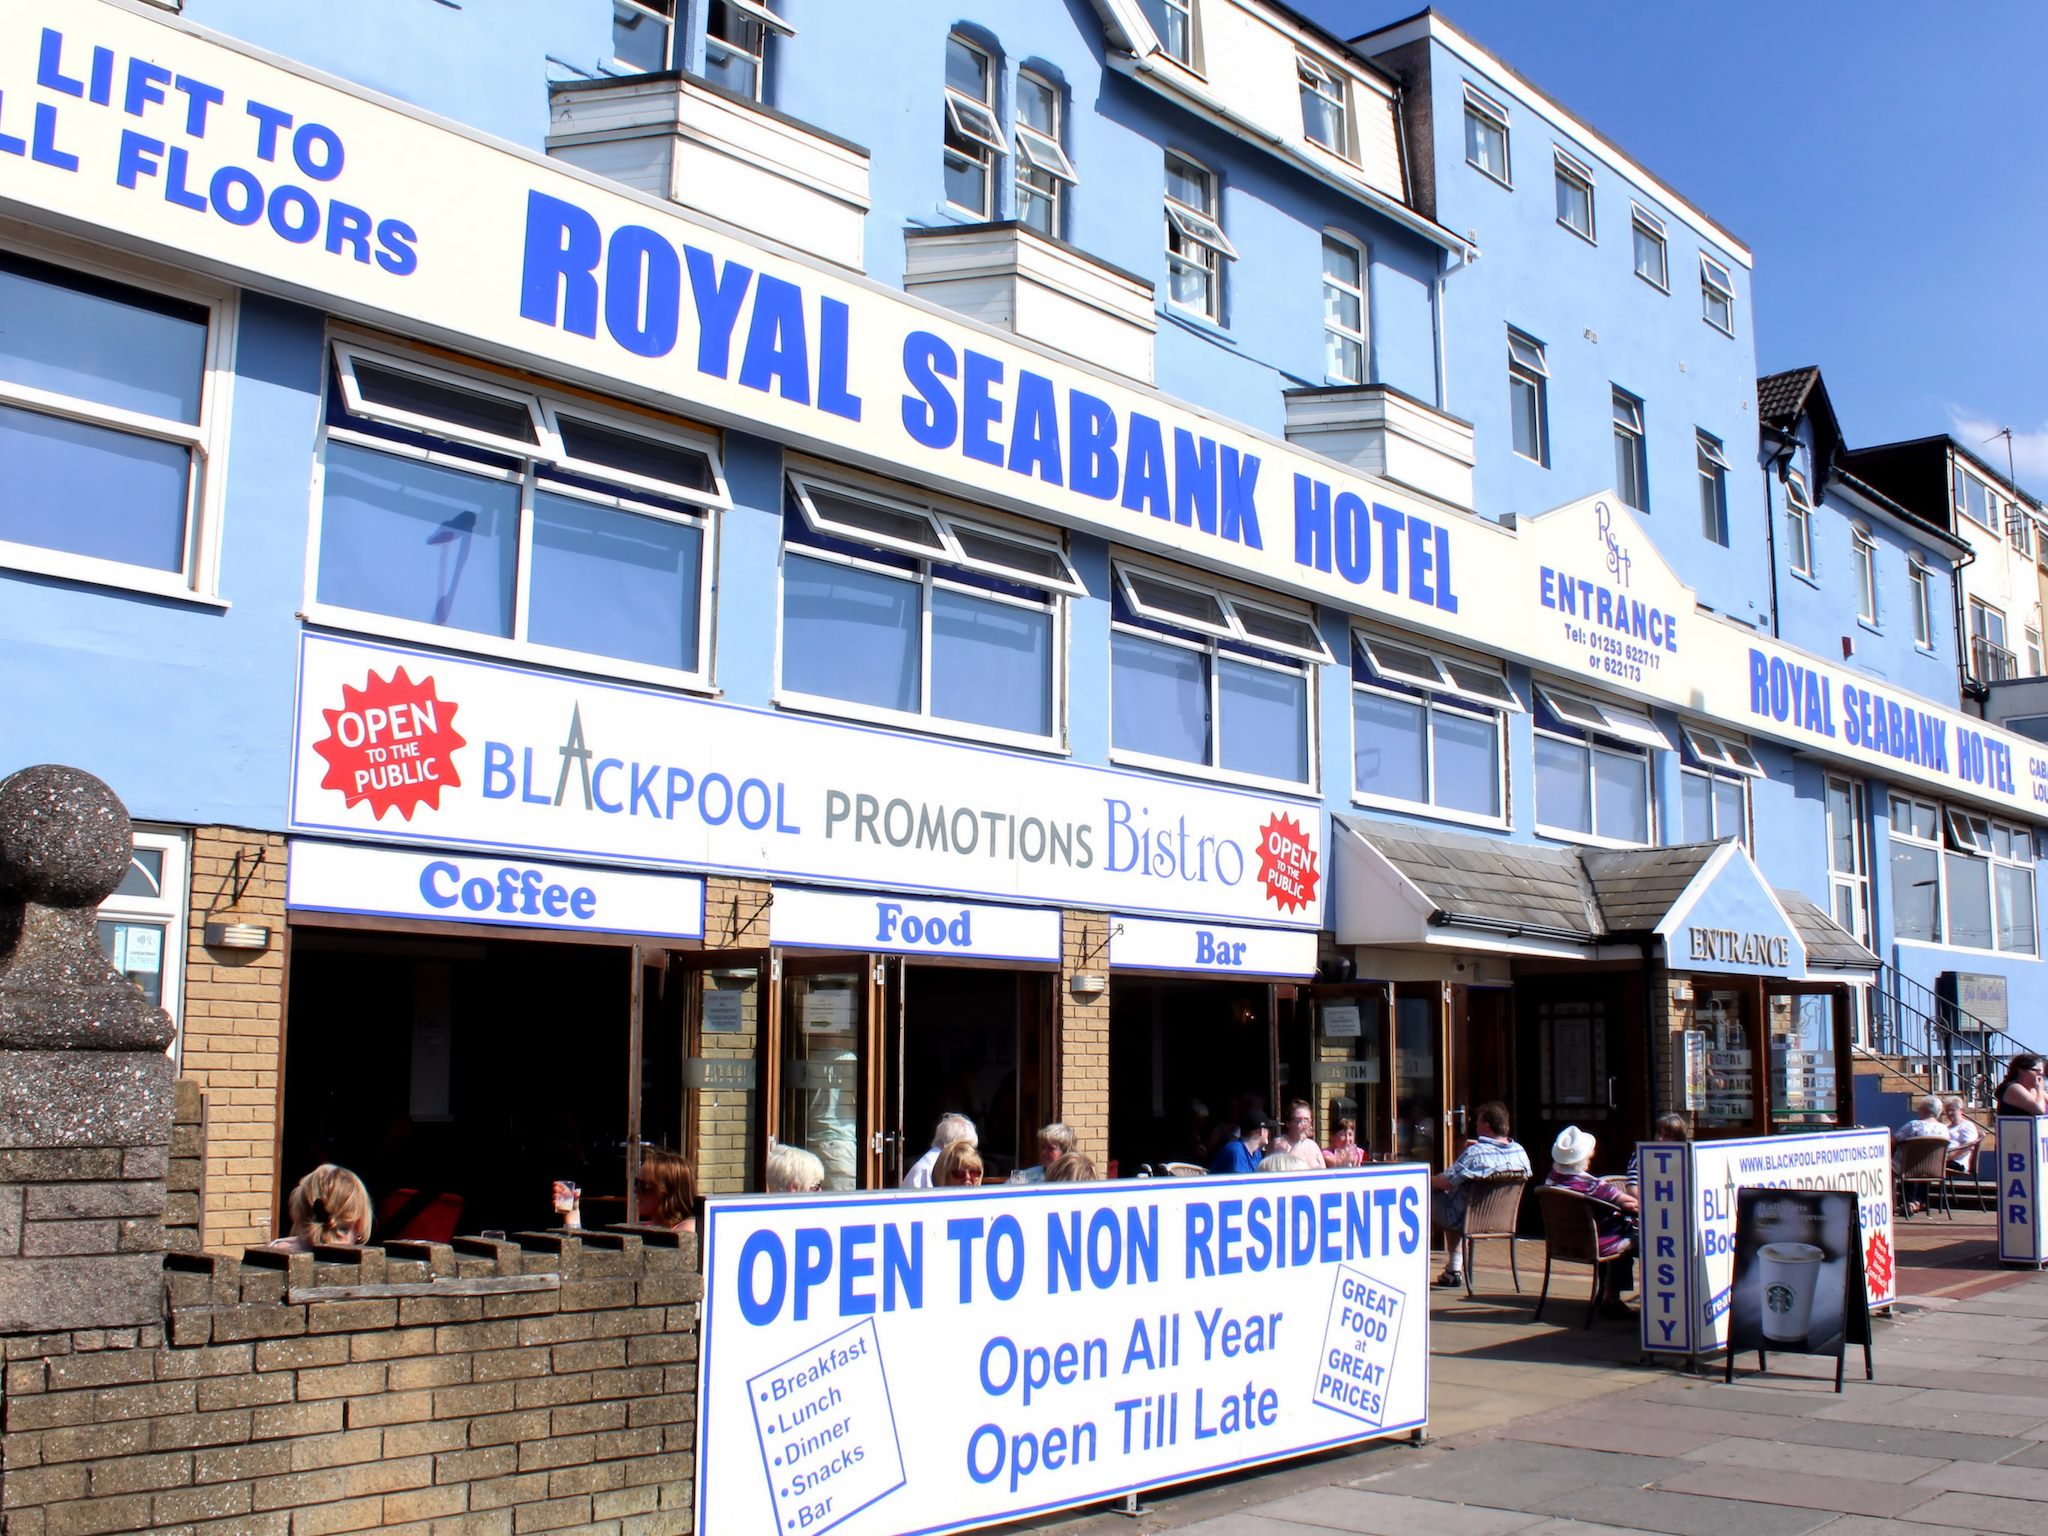 The Royal Seabank Hotel1